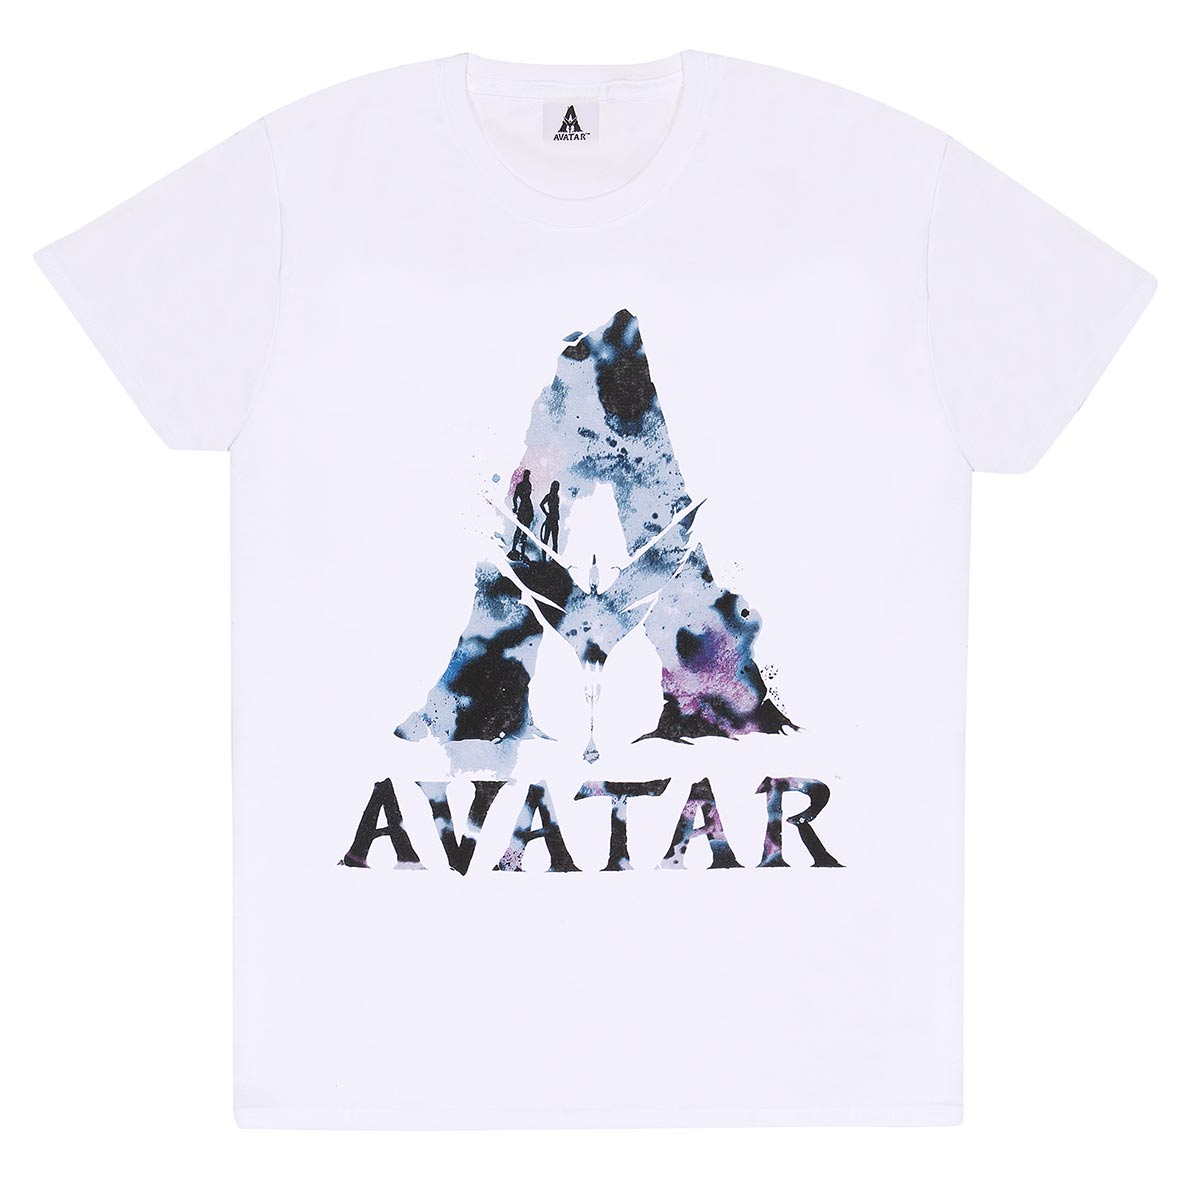 Avatar Big A T-Shirt